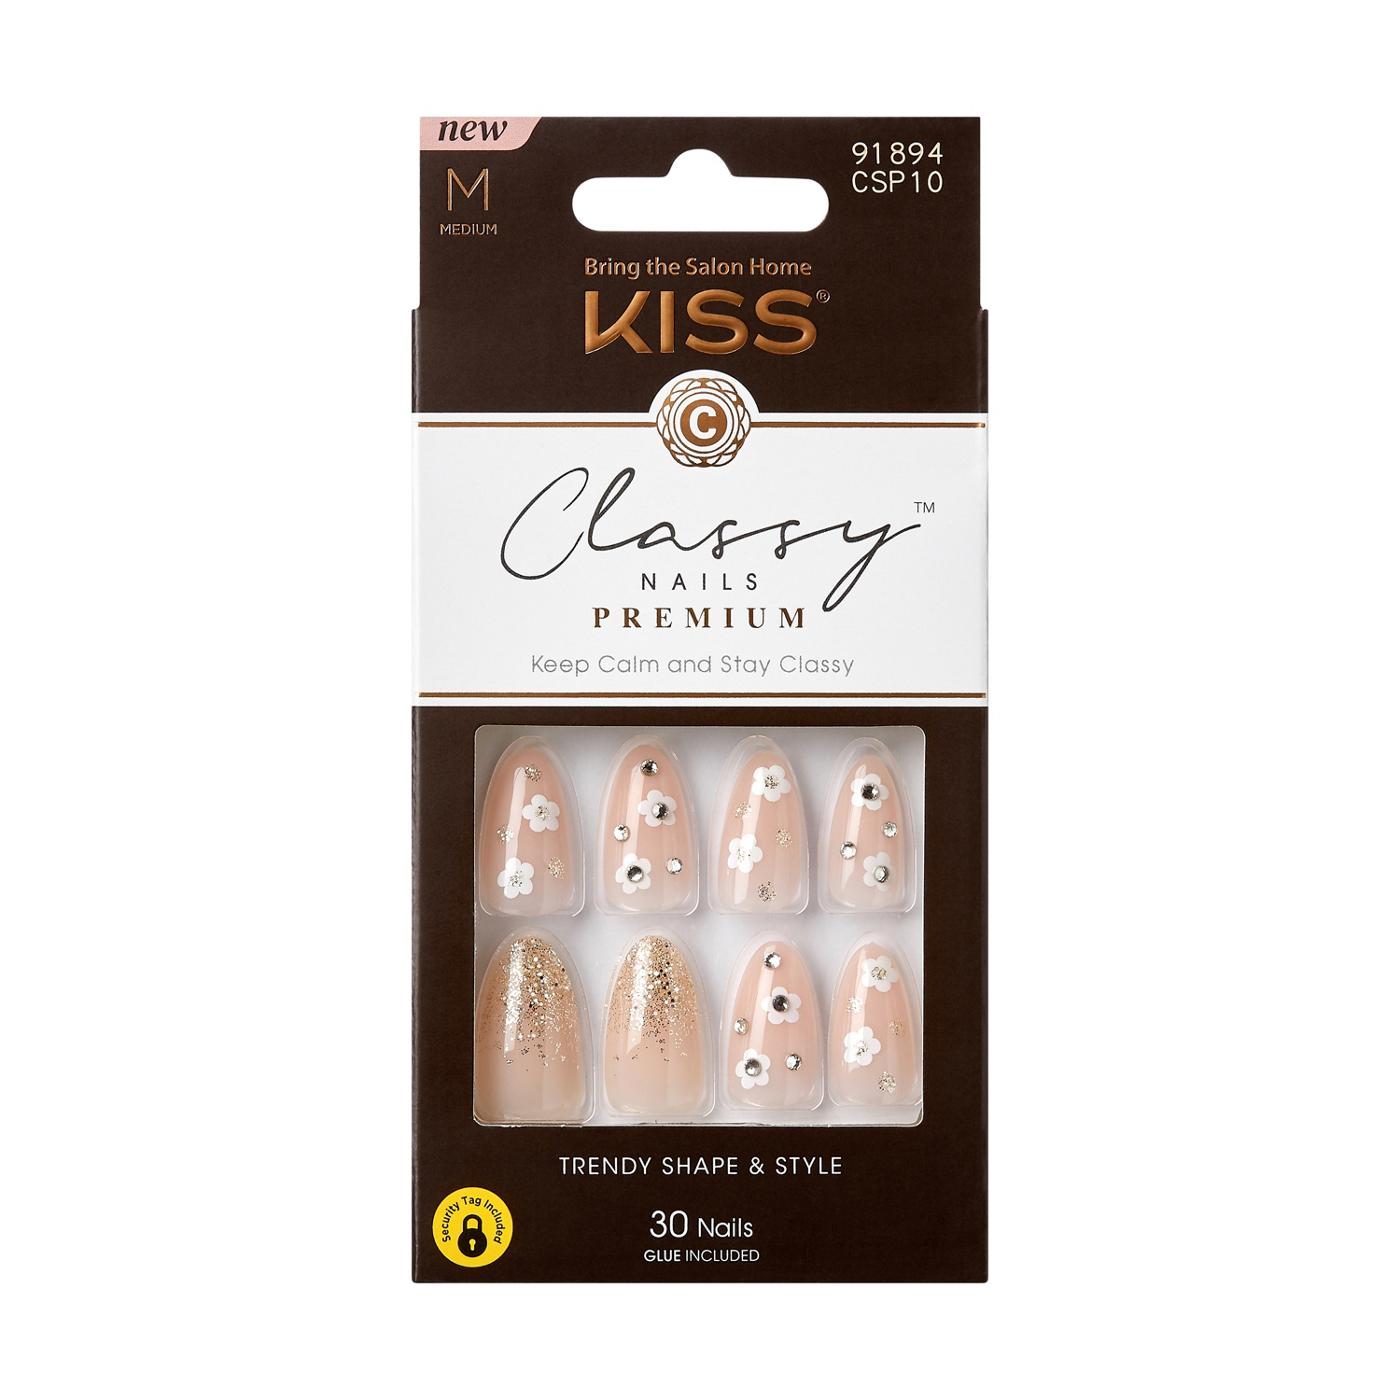 KISS Classy Premium Nails - Gleaming; image 1 of 6